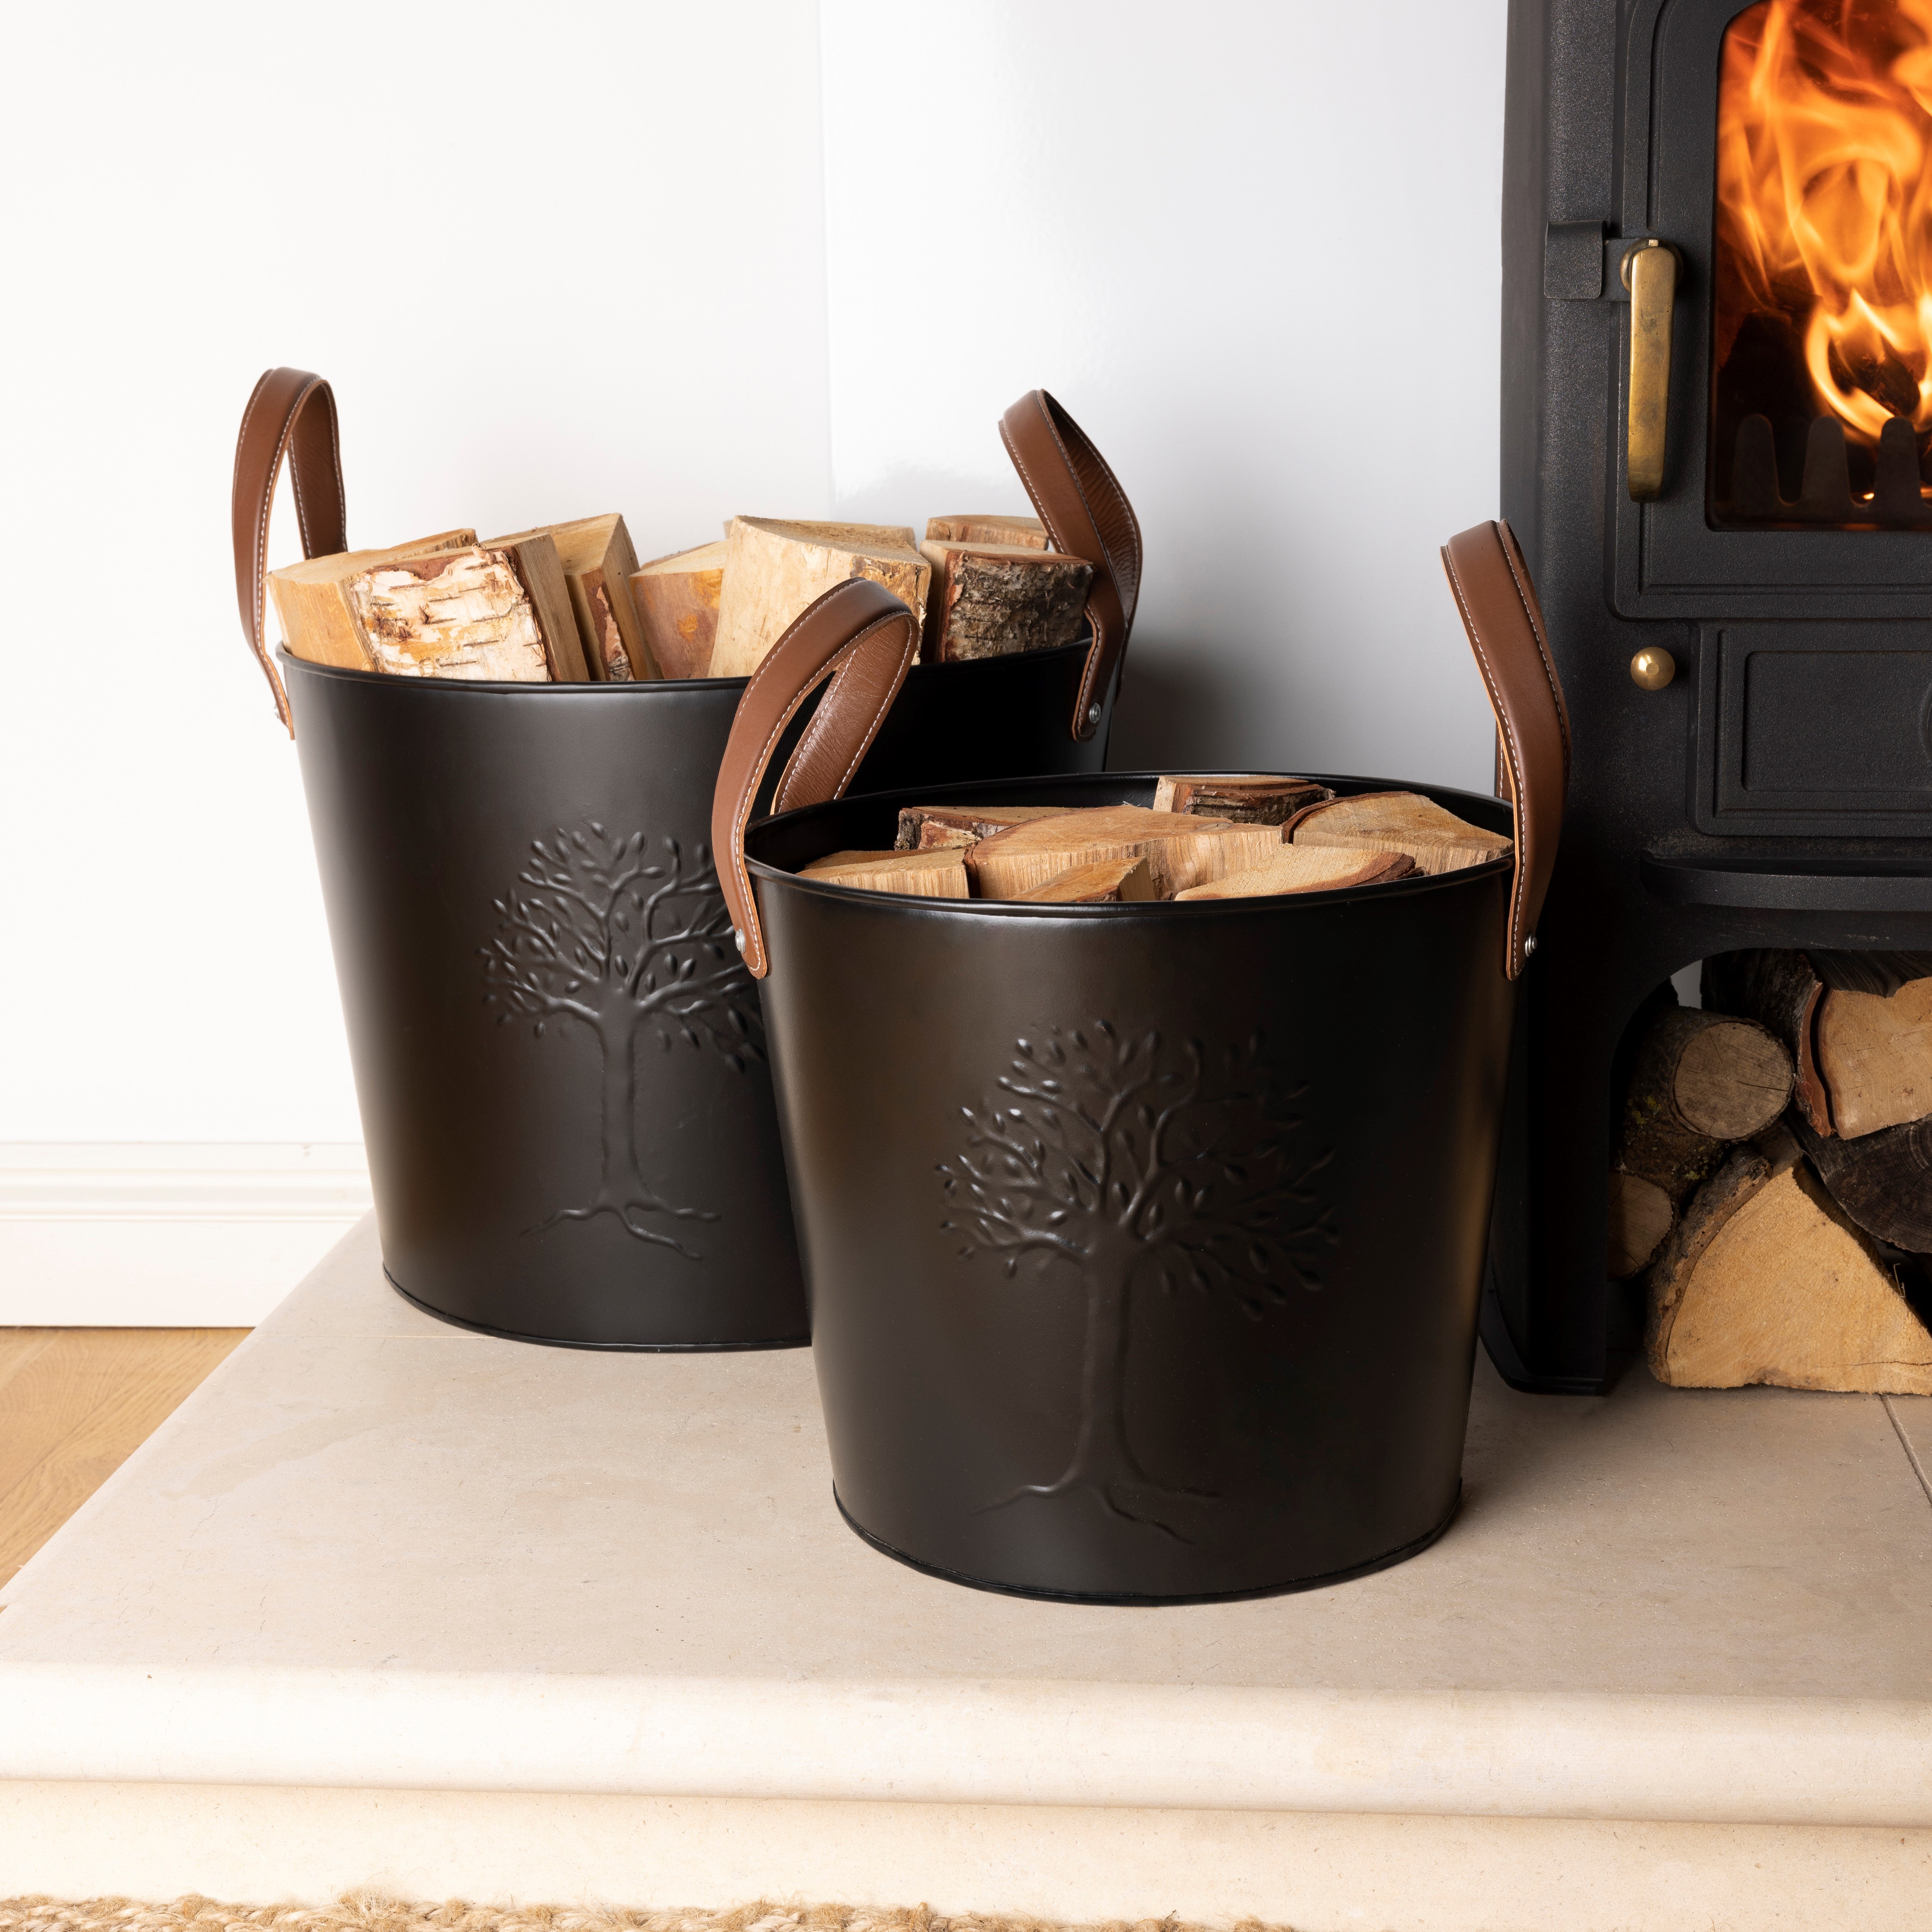 Snug - Fireside Set of 2 Mulberry Iron & Leather Firewood Buckets